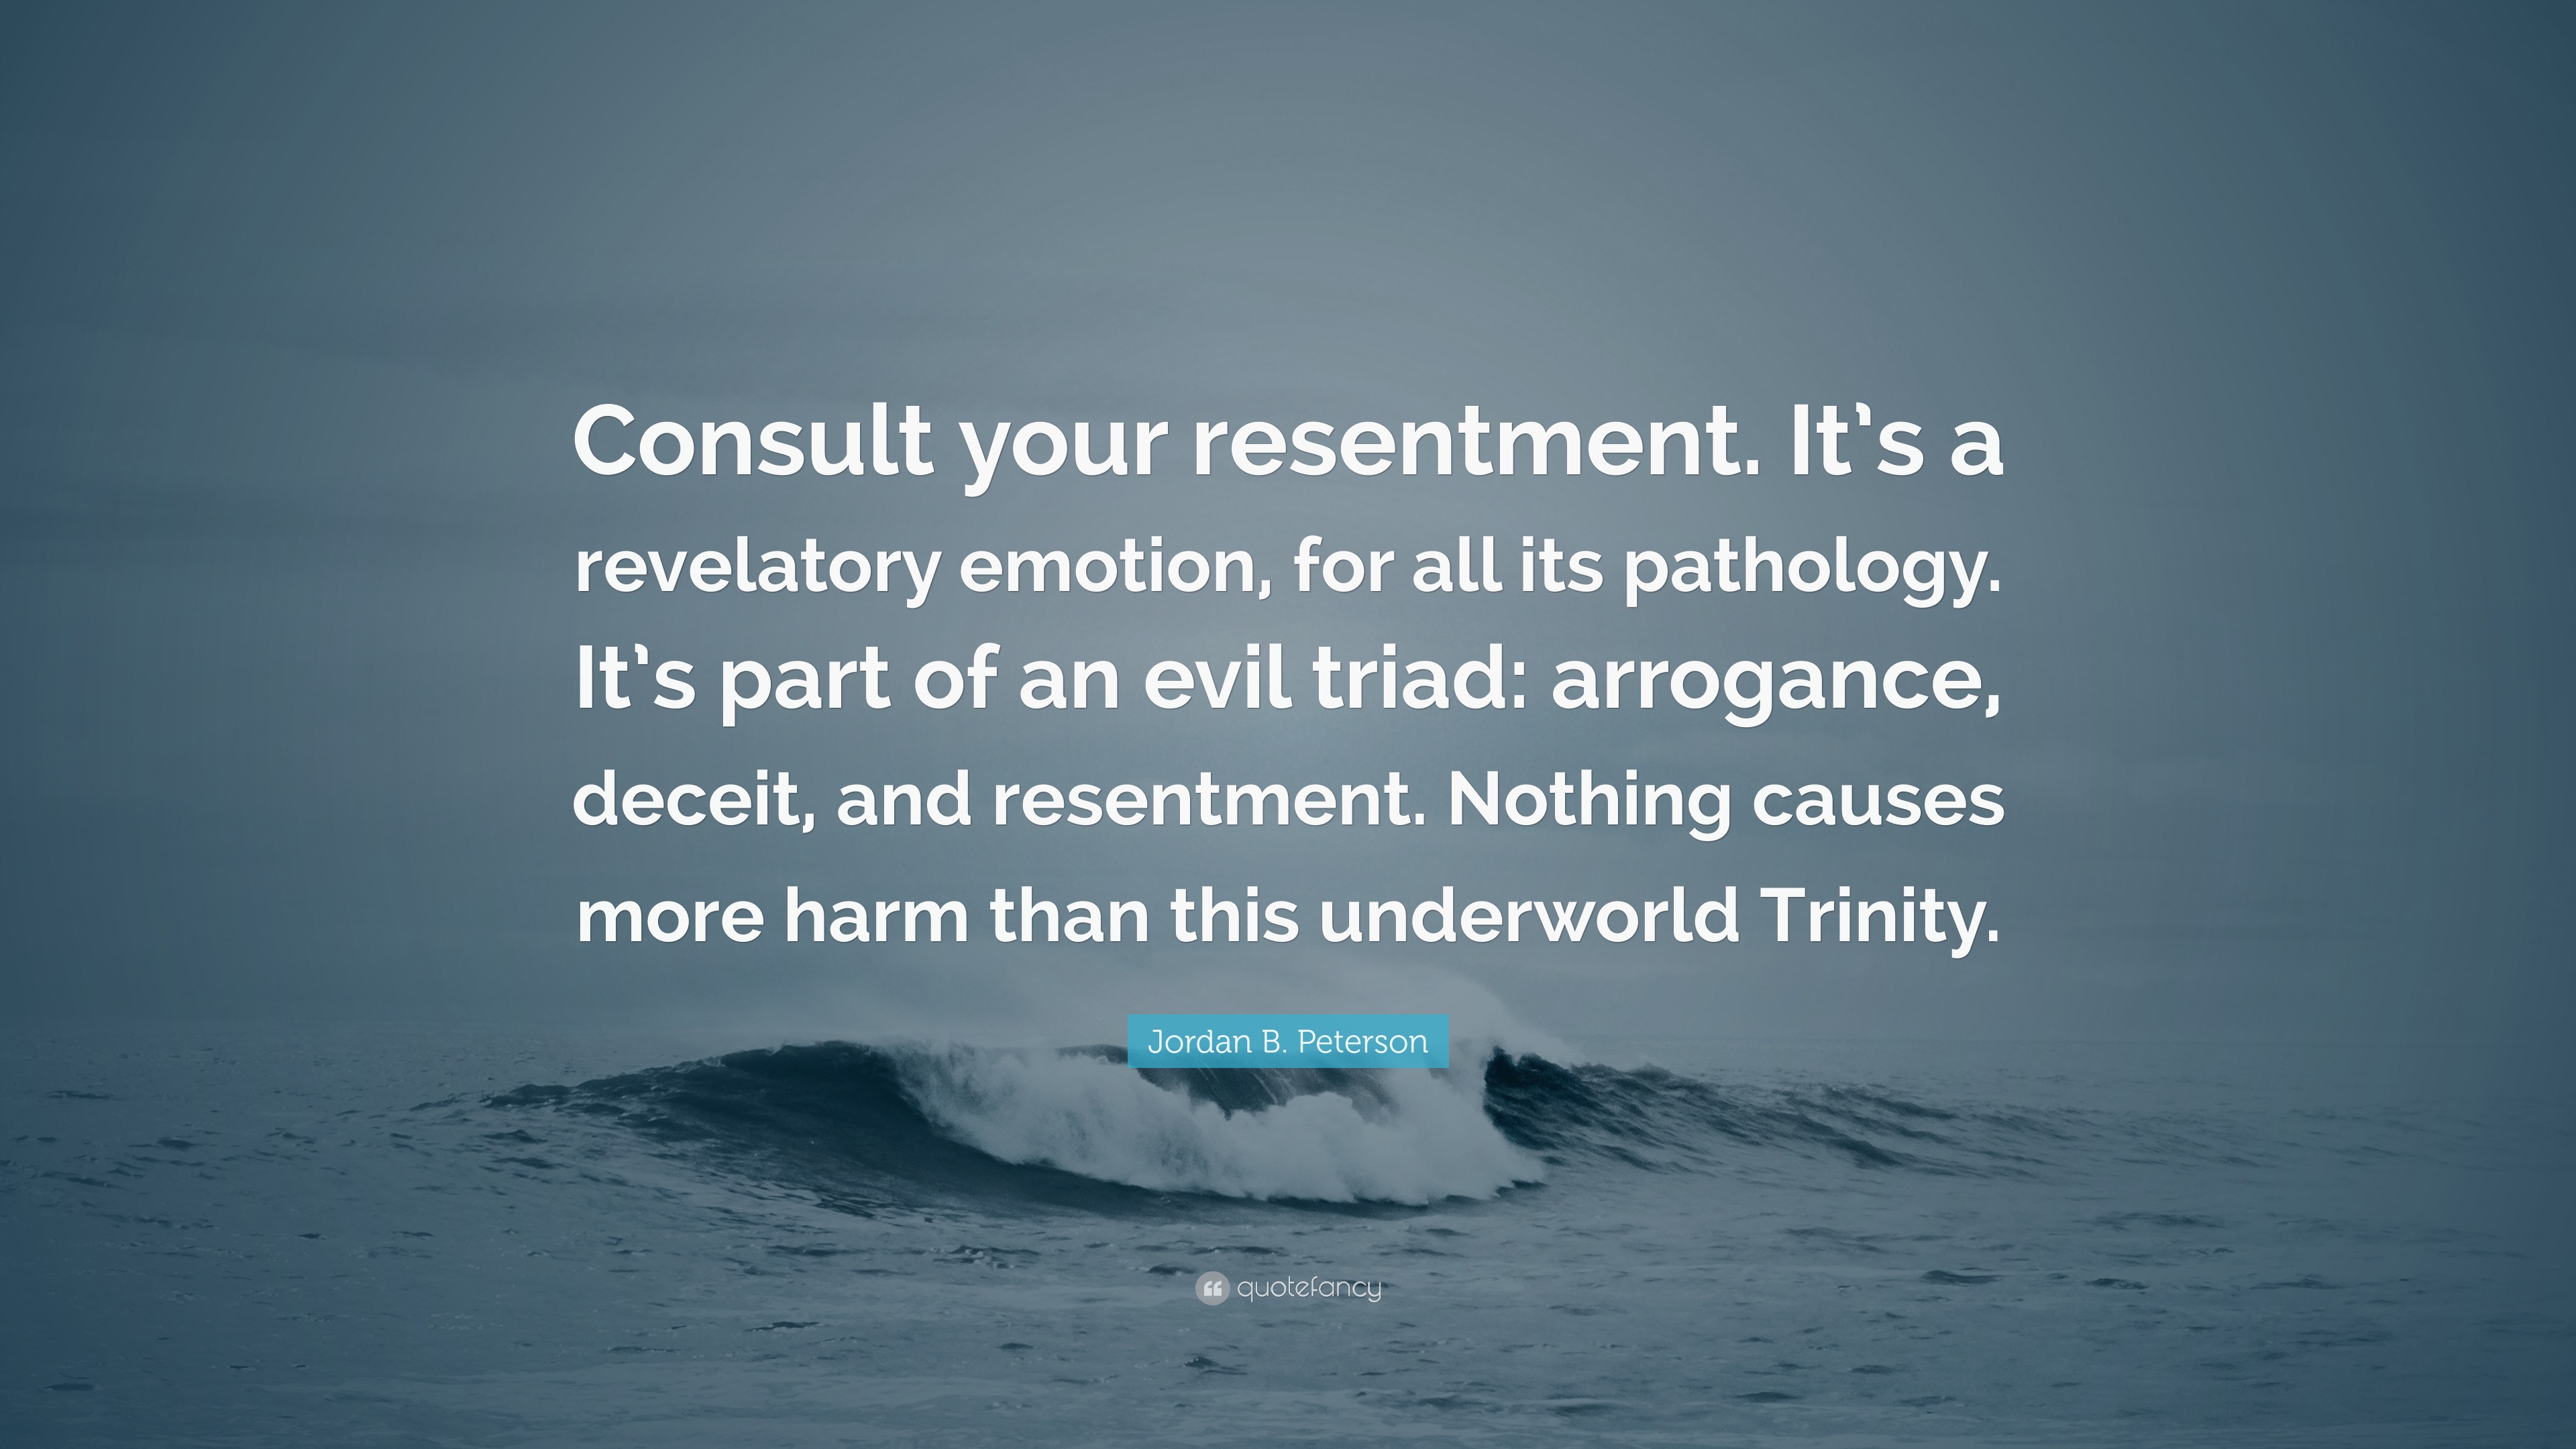 Jordan B. Quote: “Consult your resentment. It's a emotion, all its pathology. It's part of an evil triad: arrogance, deceit...”